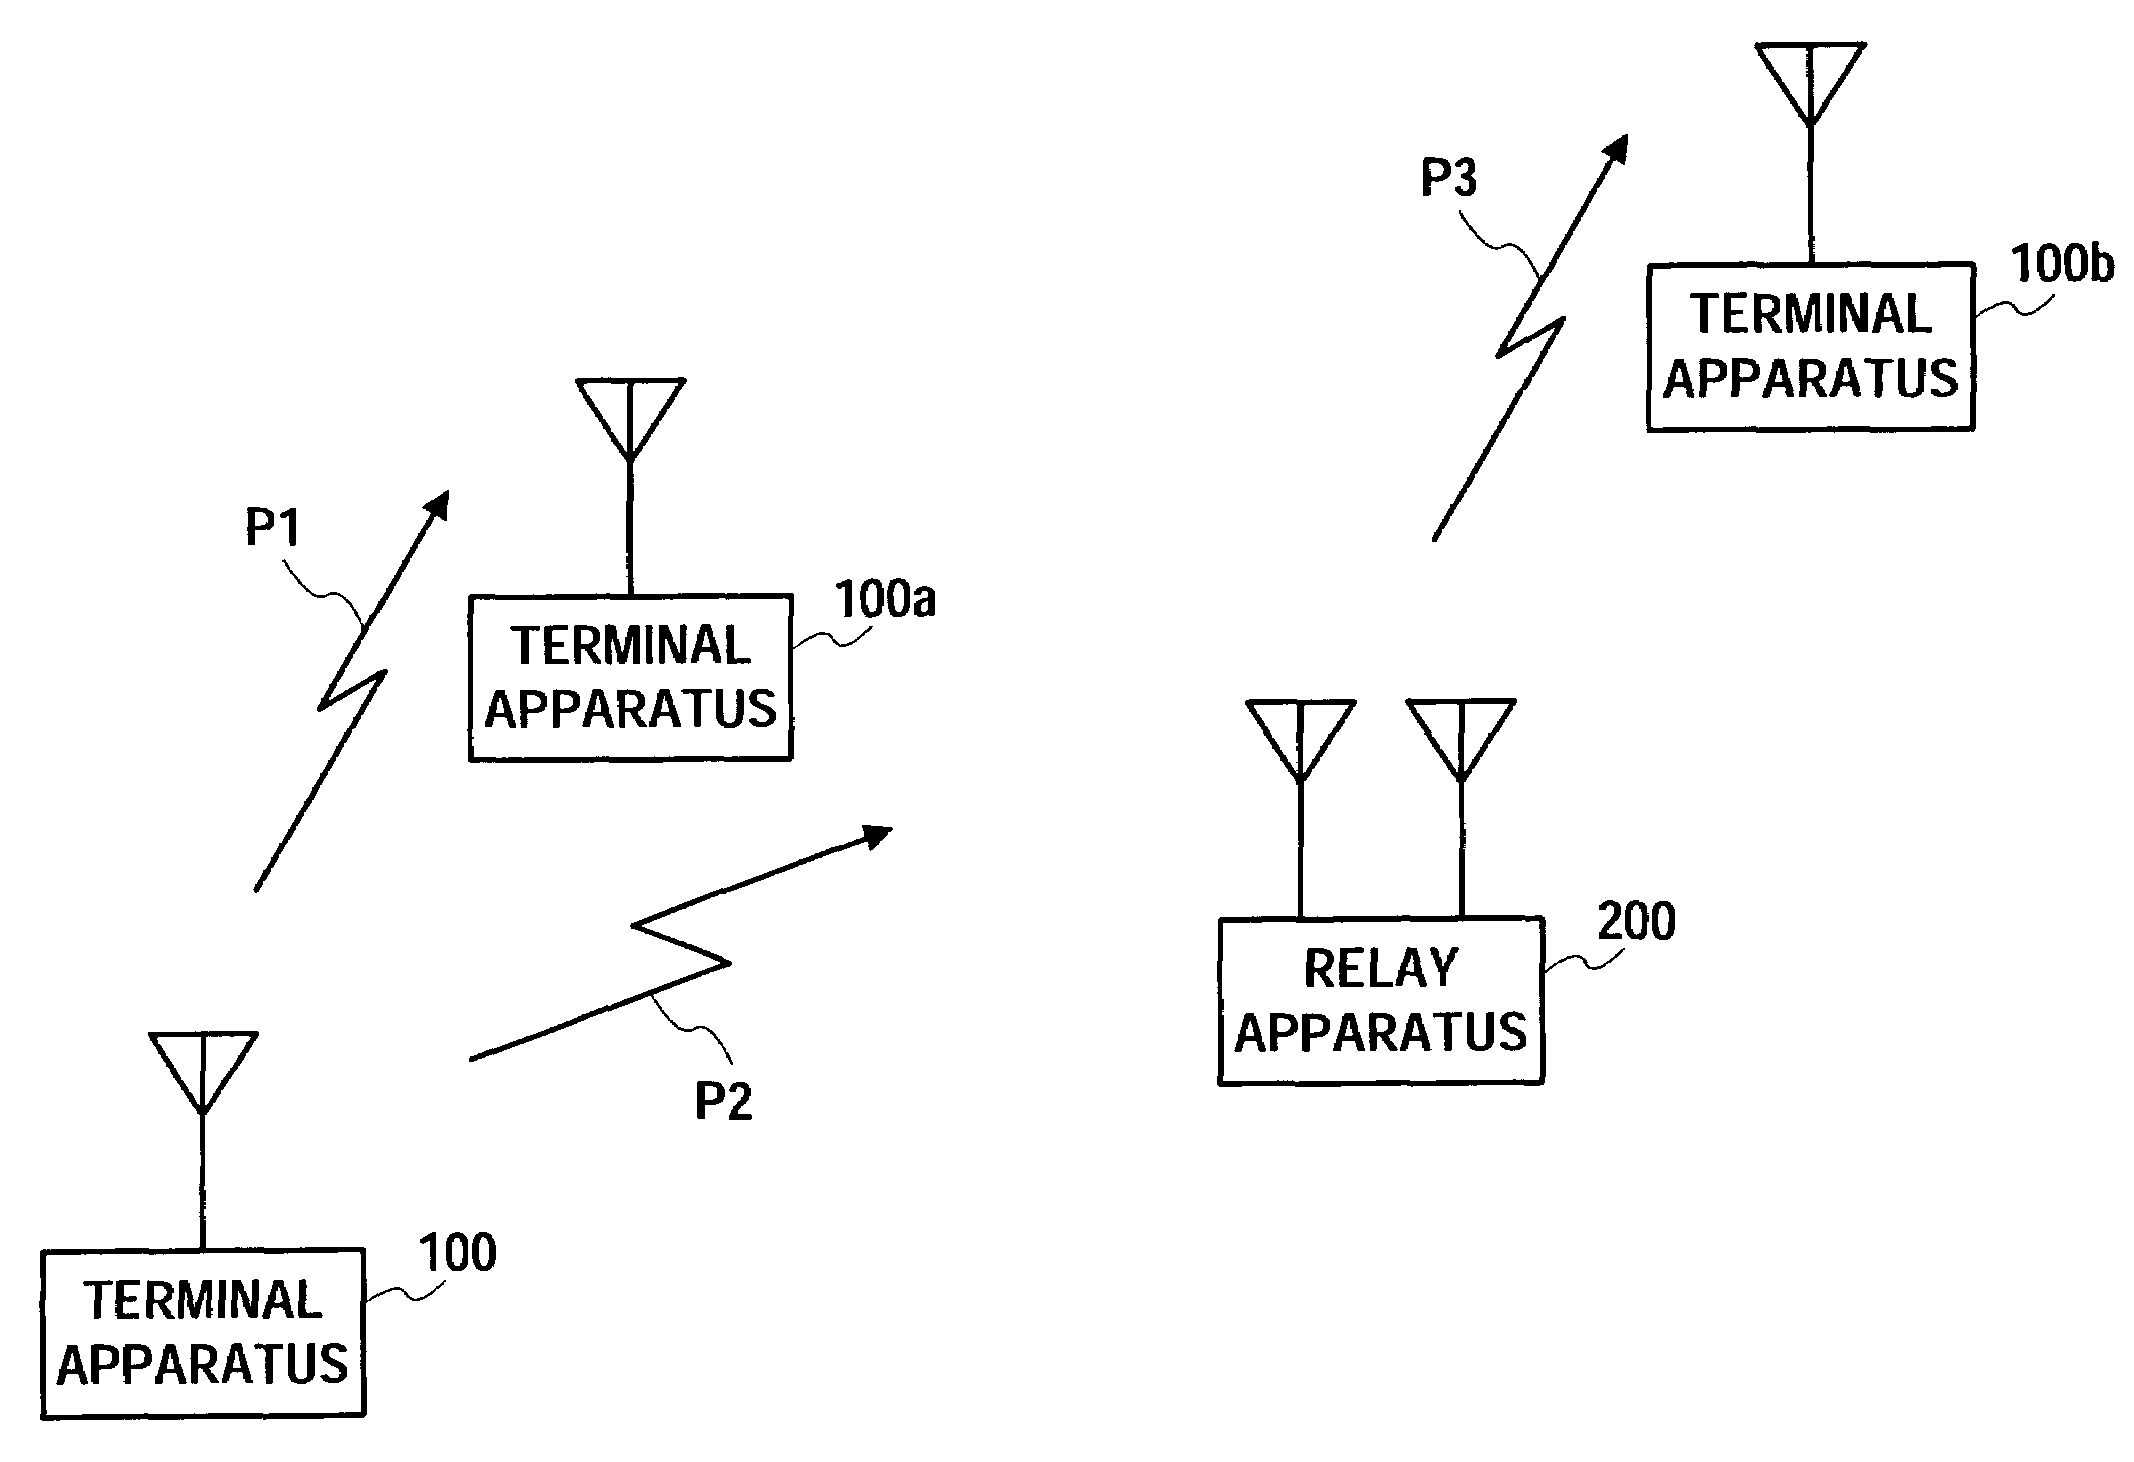 Relay apparatus, terminal apparatus and relay method